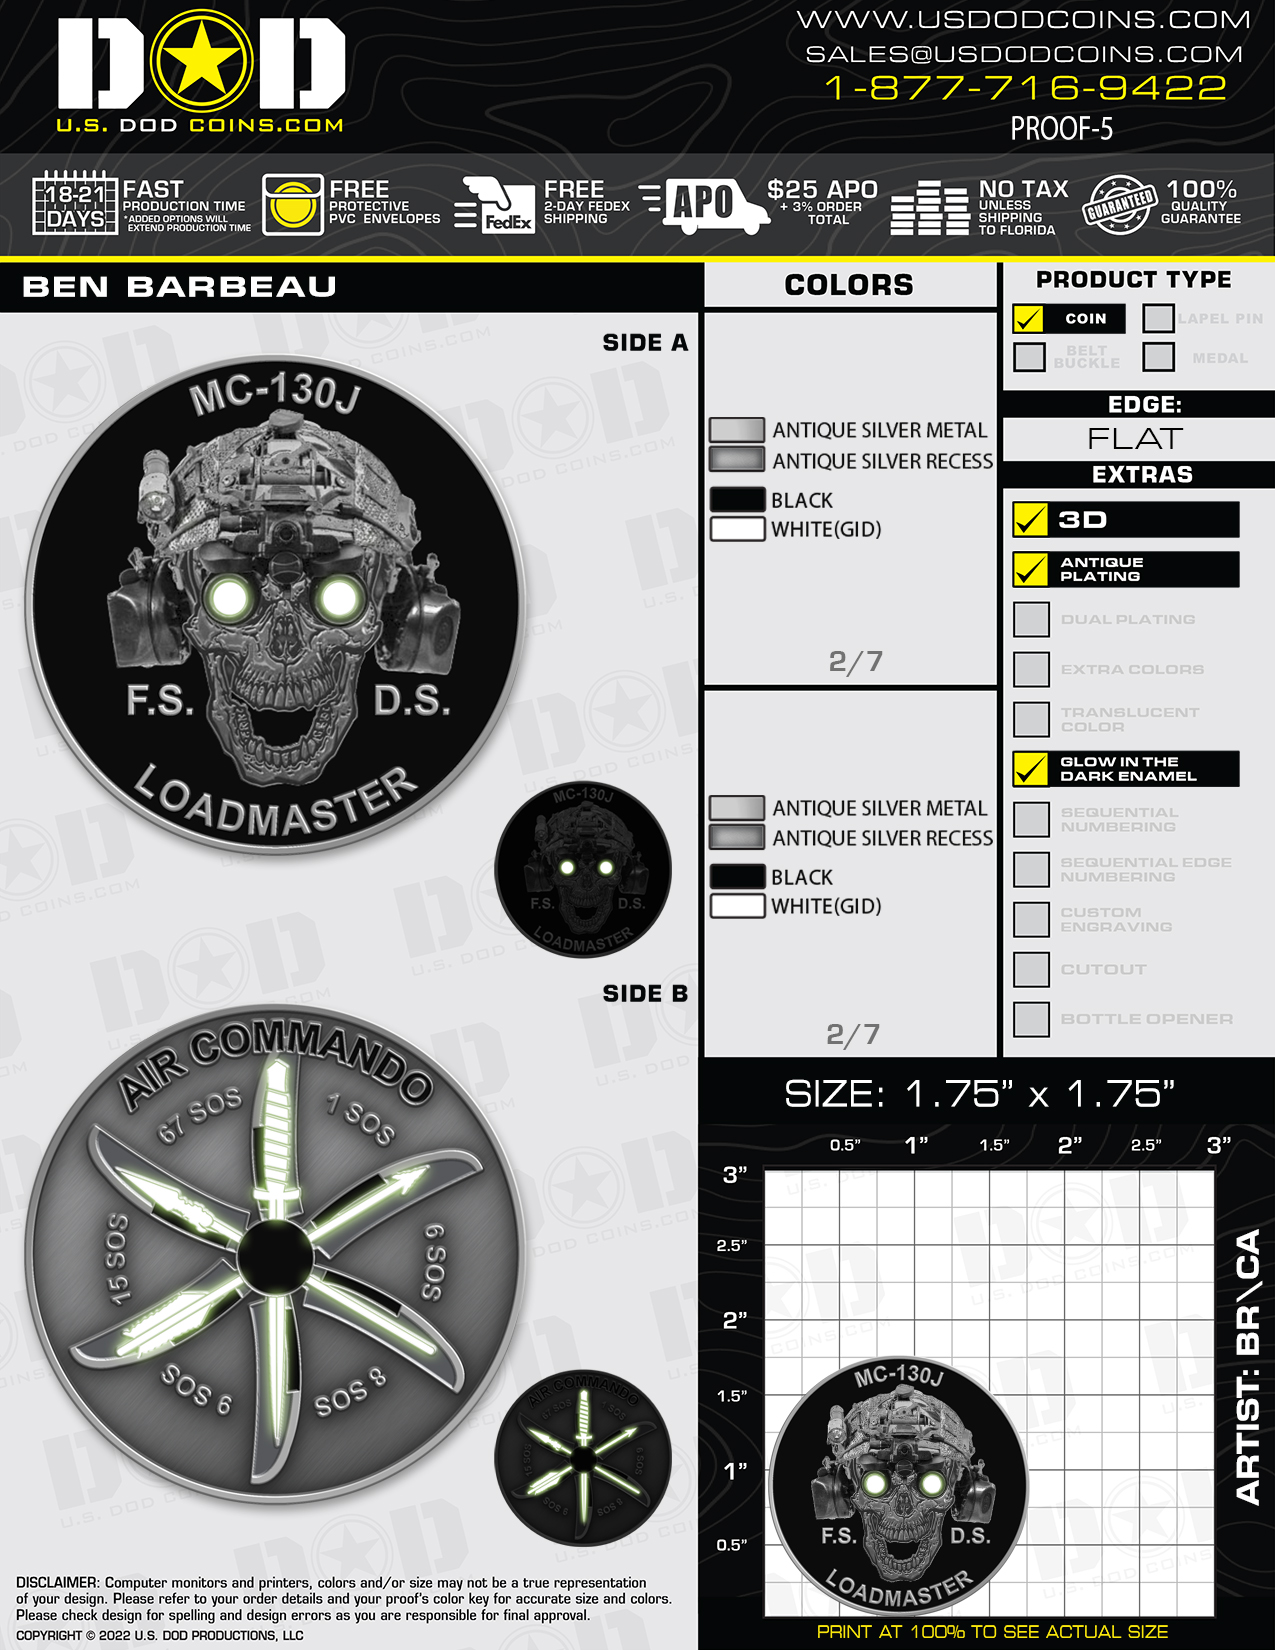 Air Commando Glow-in-the-dark-coin USDOD Coins